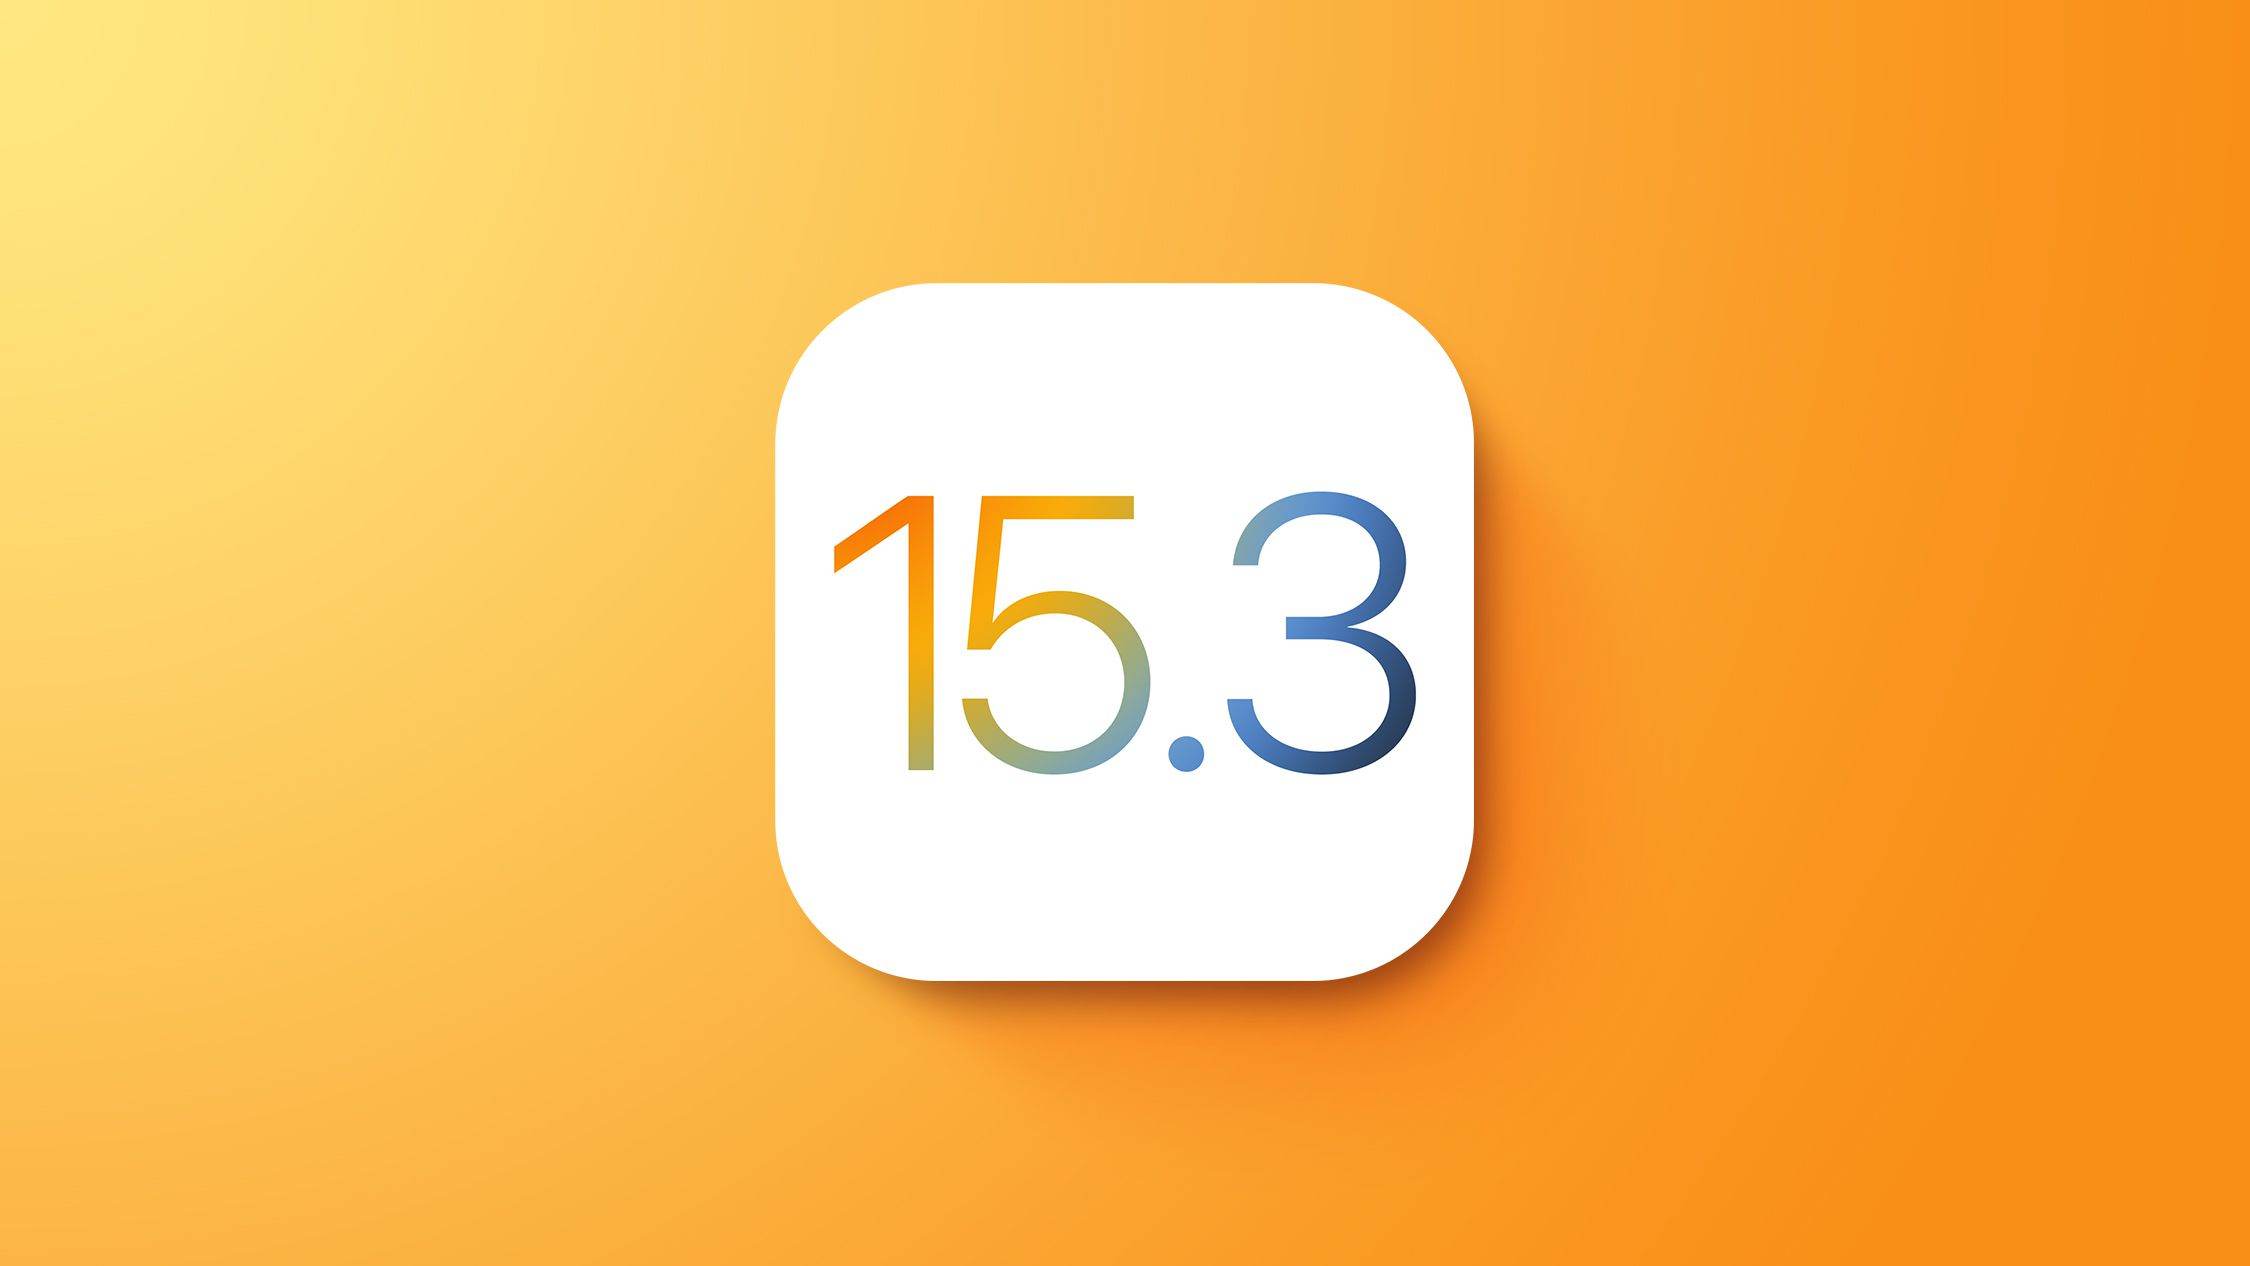 Apple 今天发布iOS 15.3！修复WebKit、Safari 等漏洞，增强安全功能！